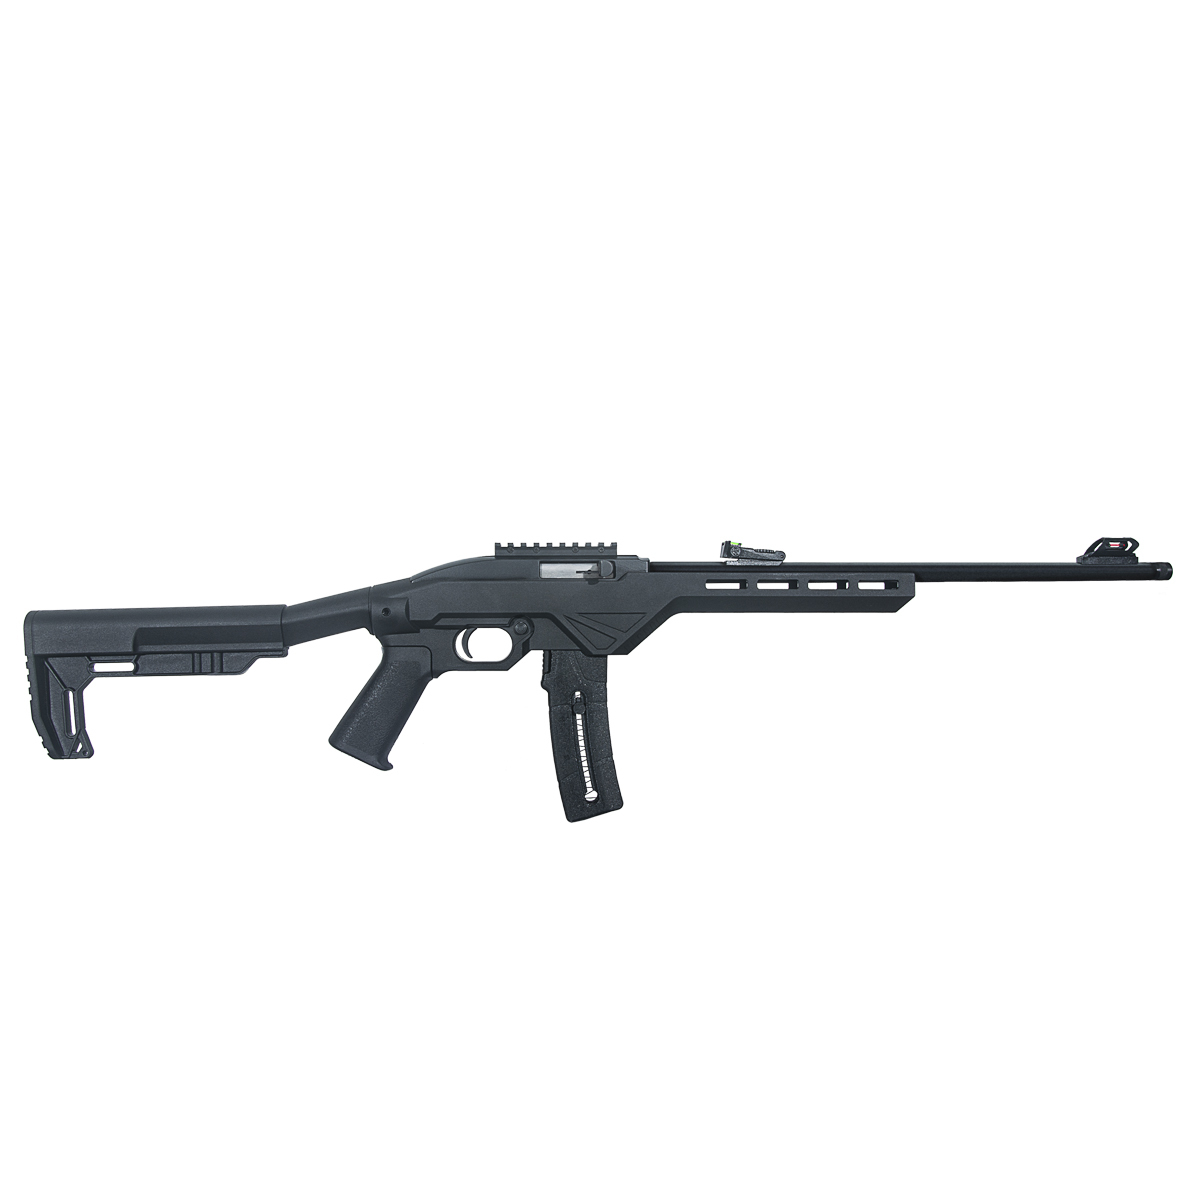 Rifle CBC .22LR Semiautomático Tactical – Coronha Tática em Polipropileno Preta-ESGOTADO